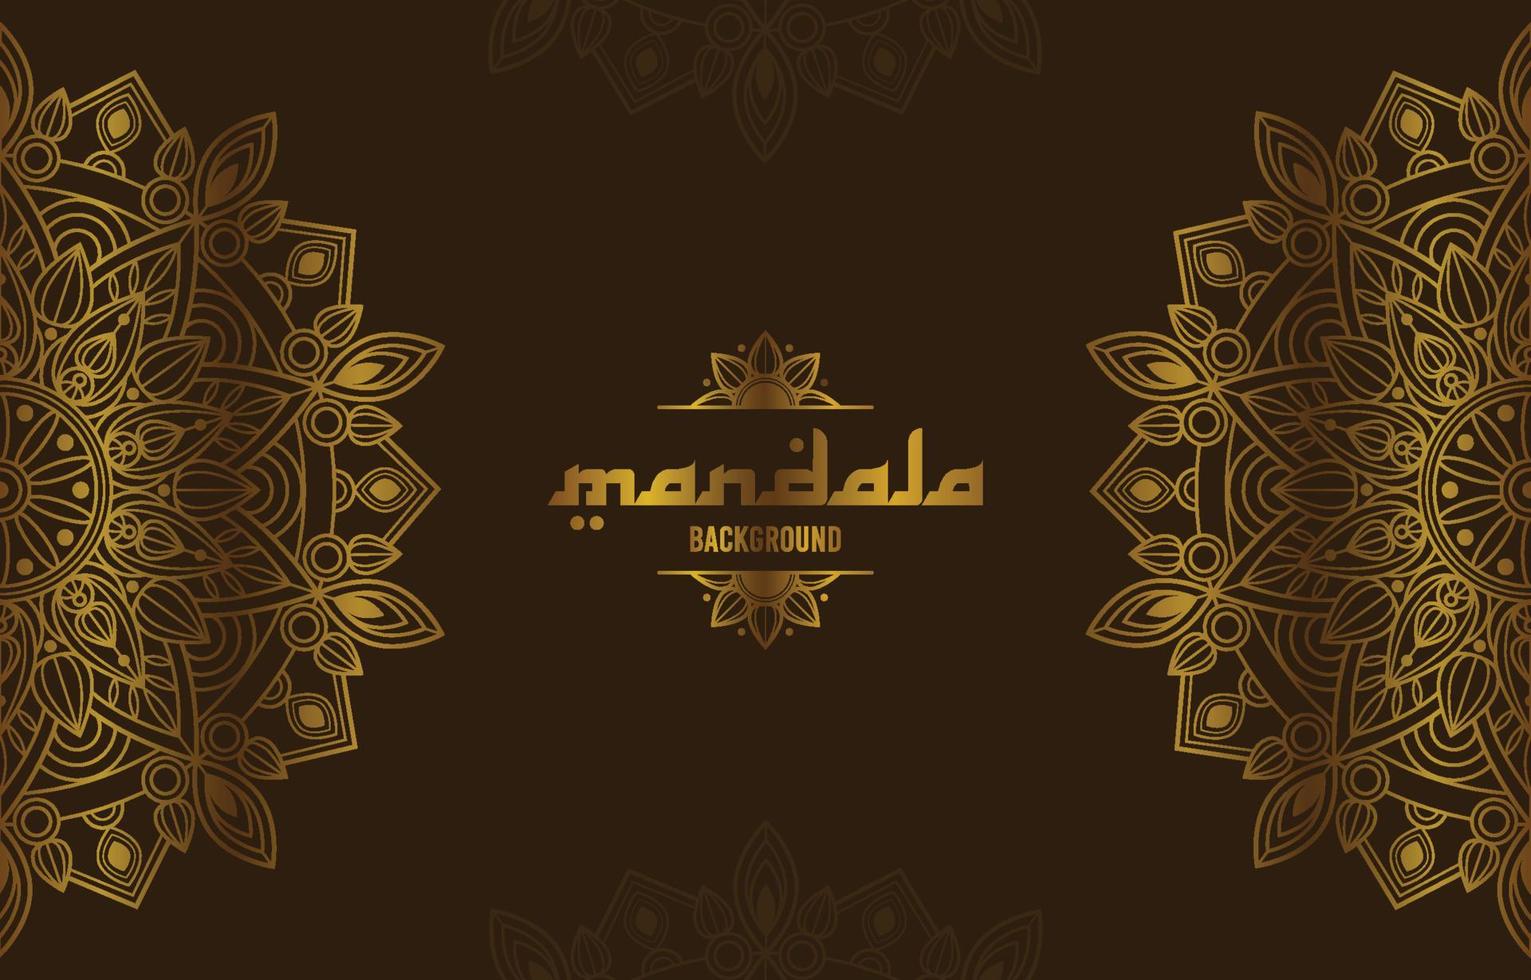 The Golden Mandala vector